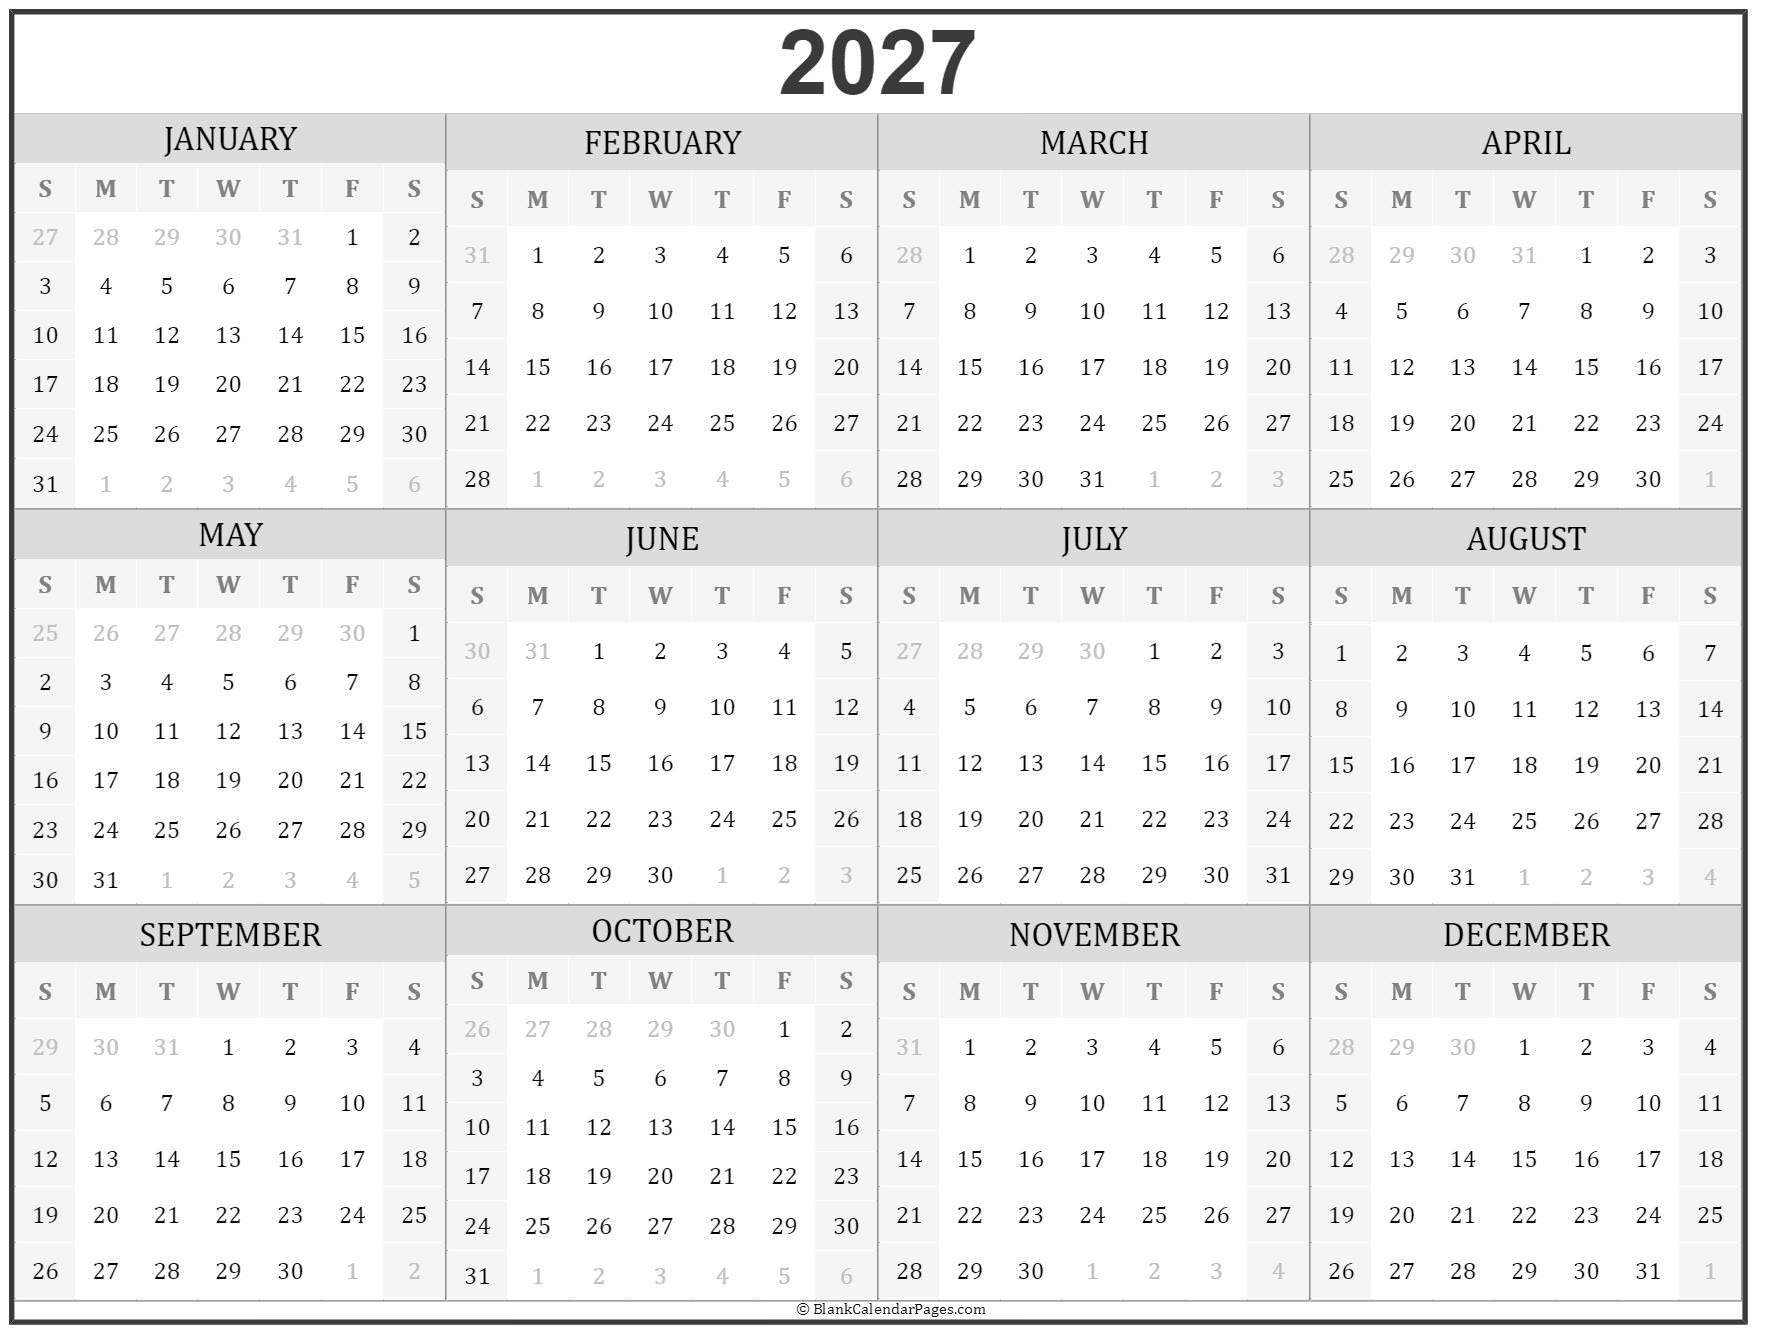 2027 year calendar yearly printable